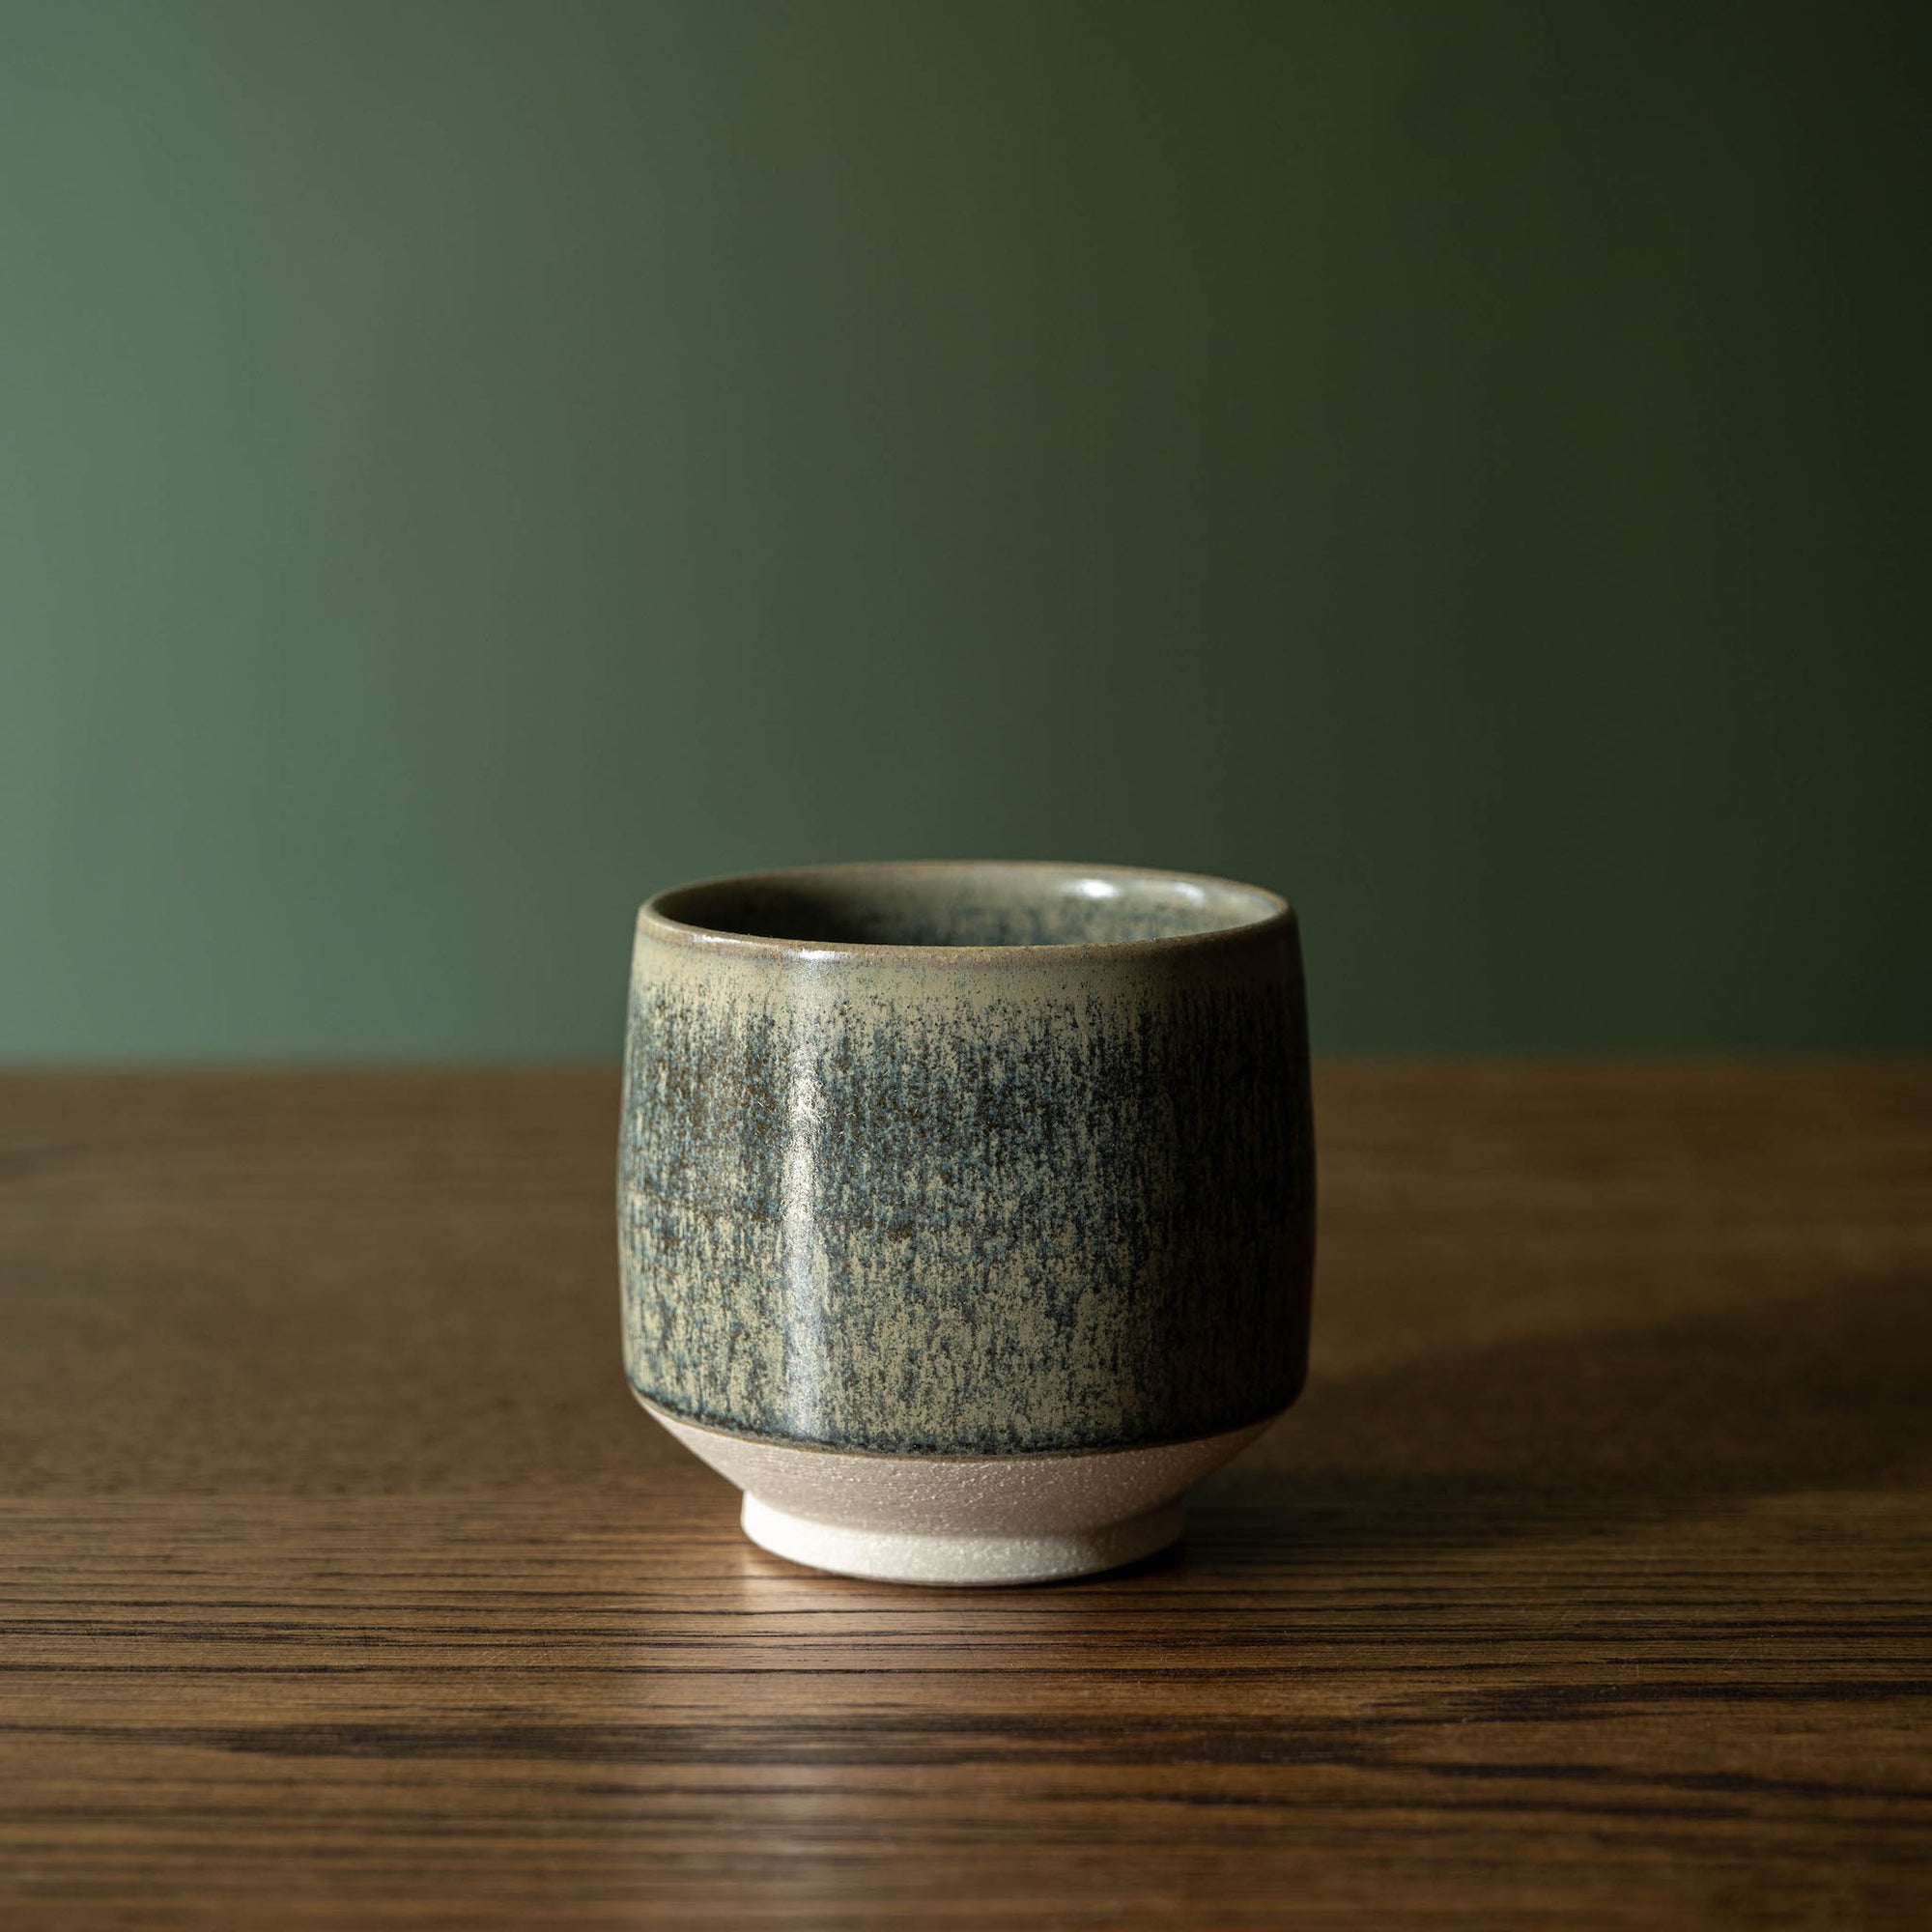 Pottery West Stoneware Cup in Nori Glaze